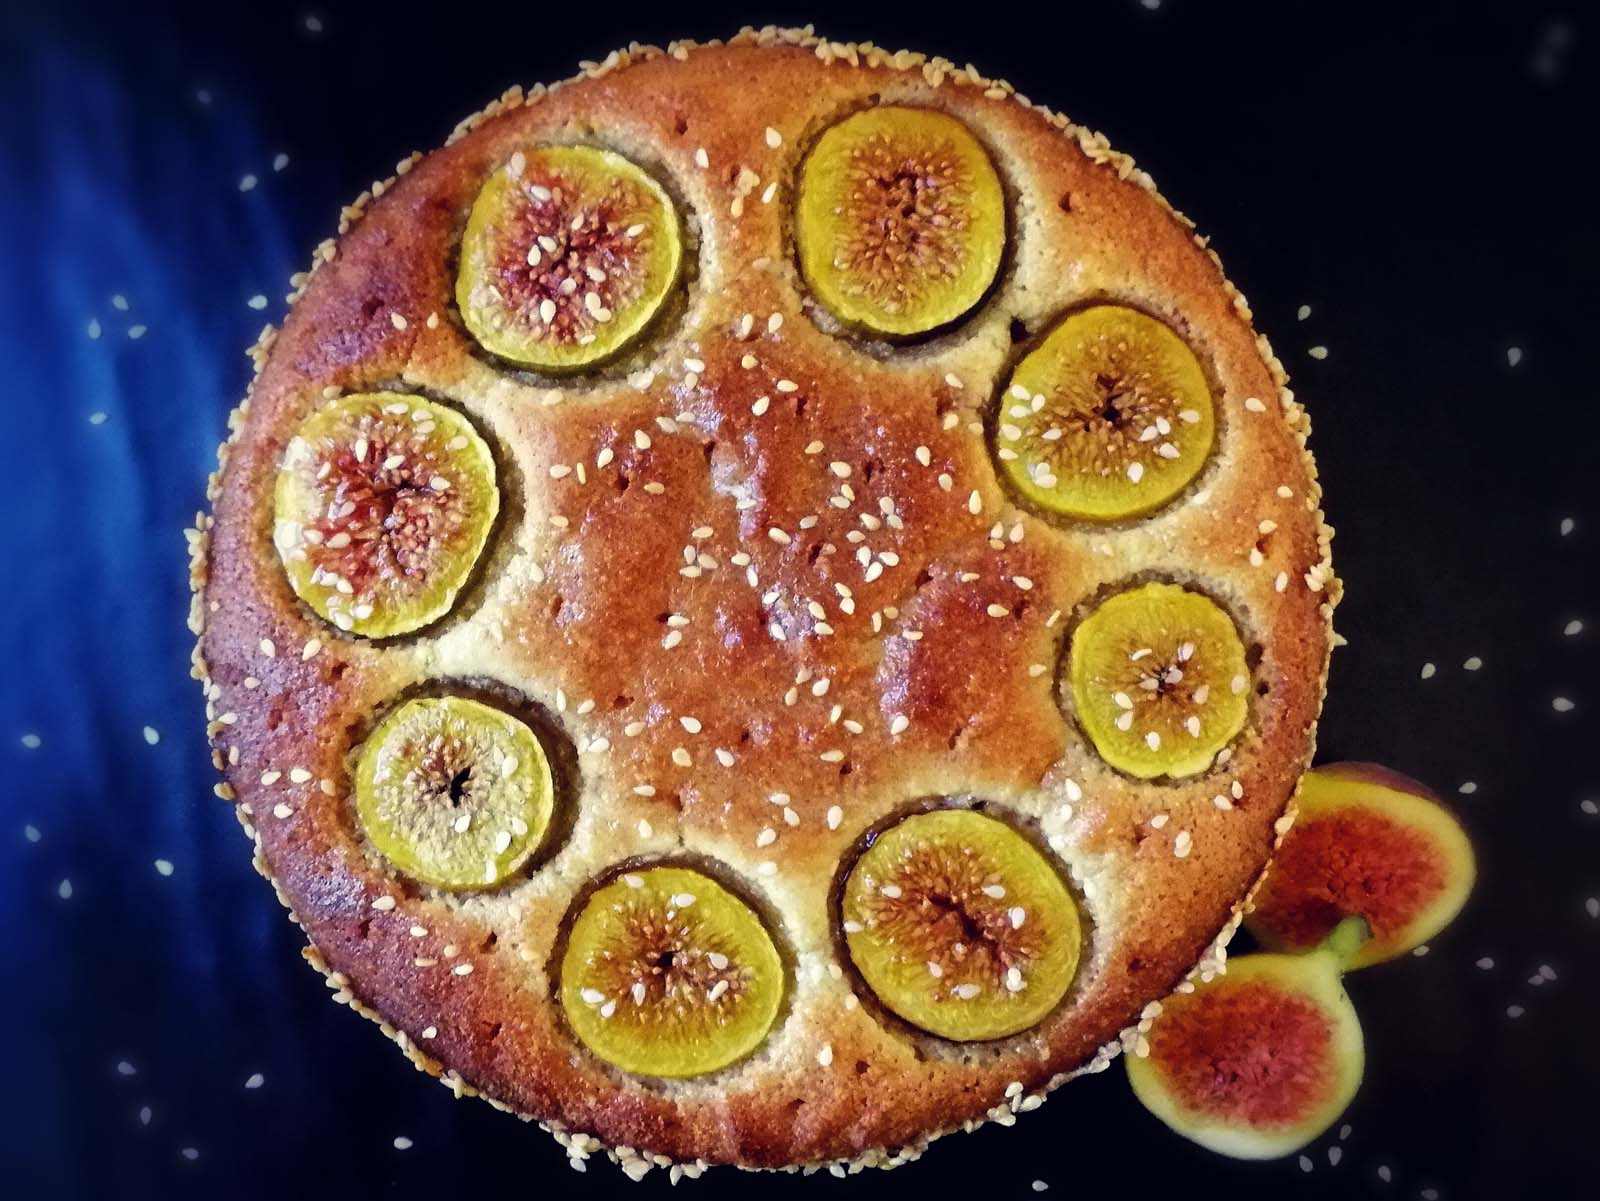 Home baking fig cake